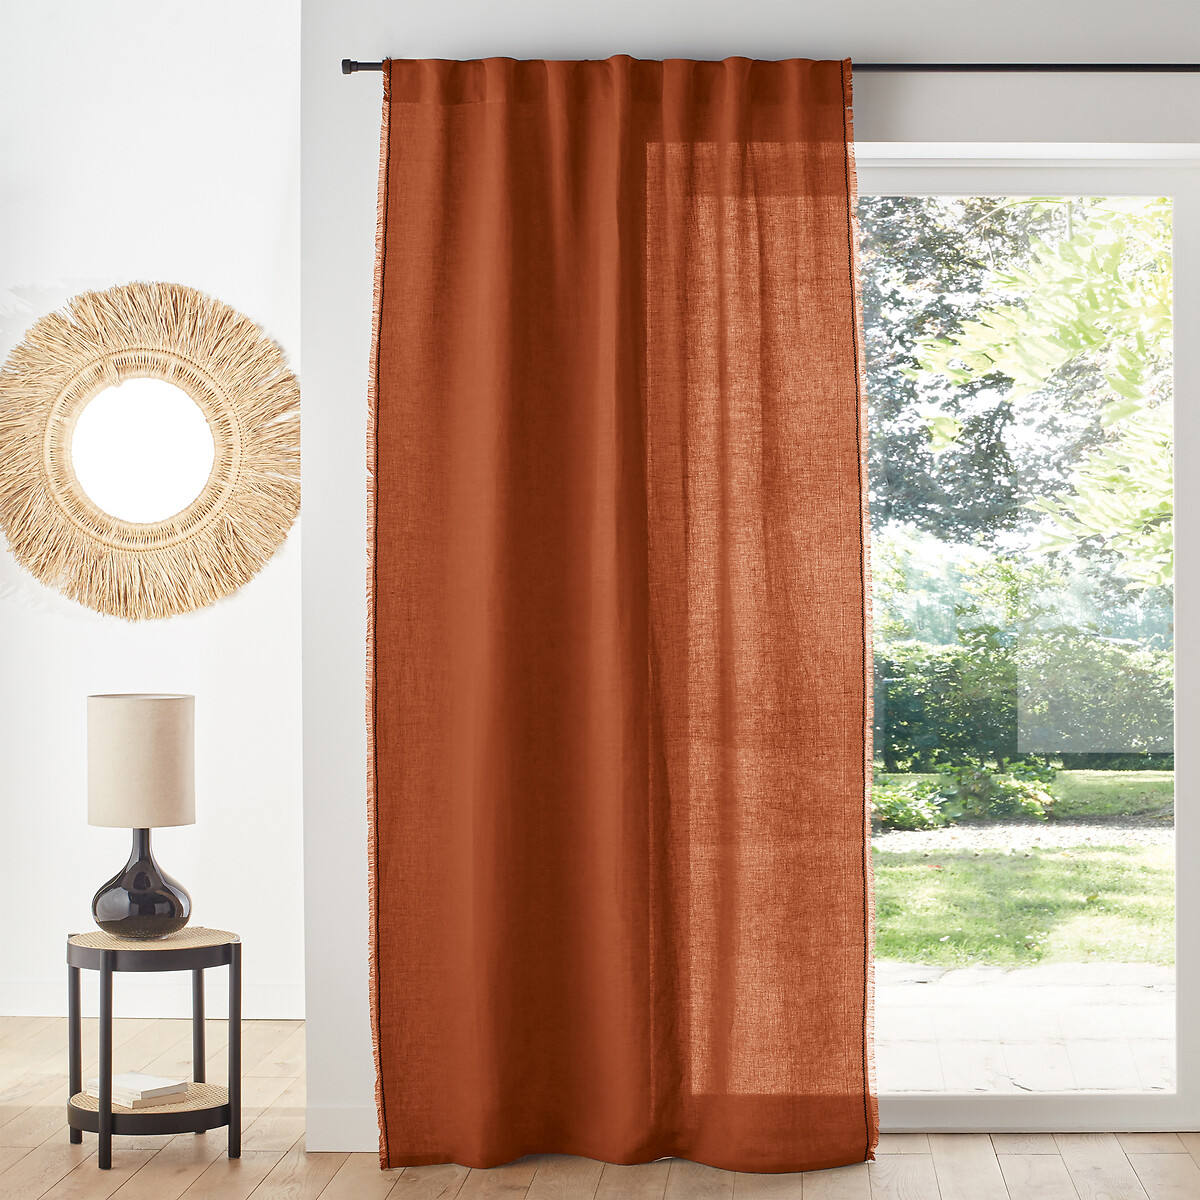 Menorca Cotton & Linen Curtain with Hidden Tabs